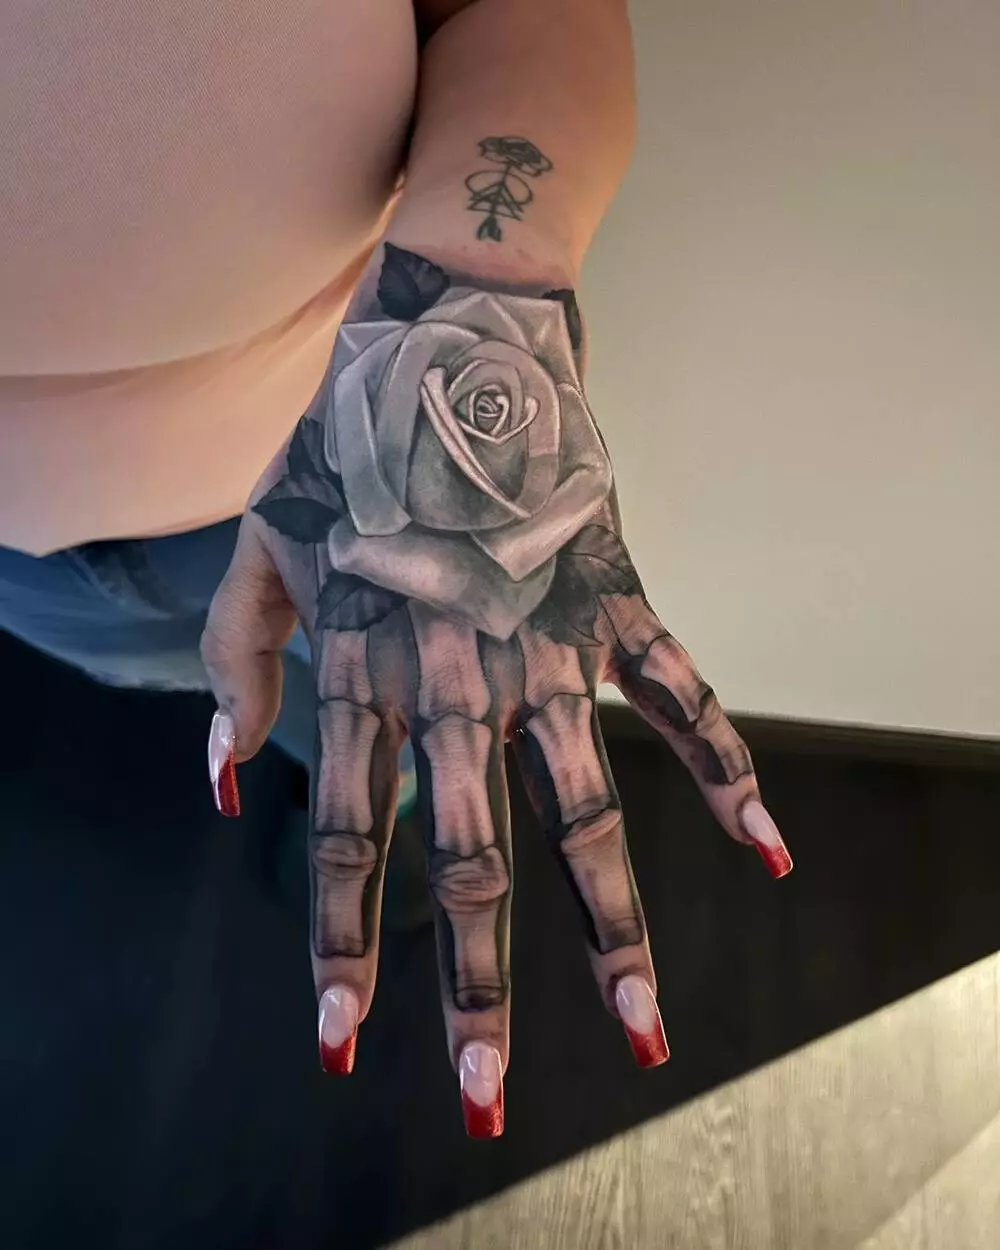 Female Skeleton and Rose Hand Tattoo